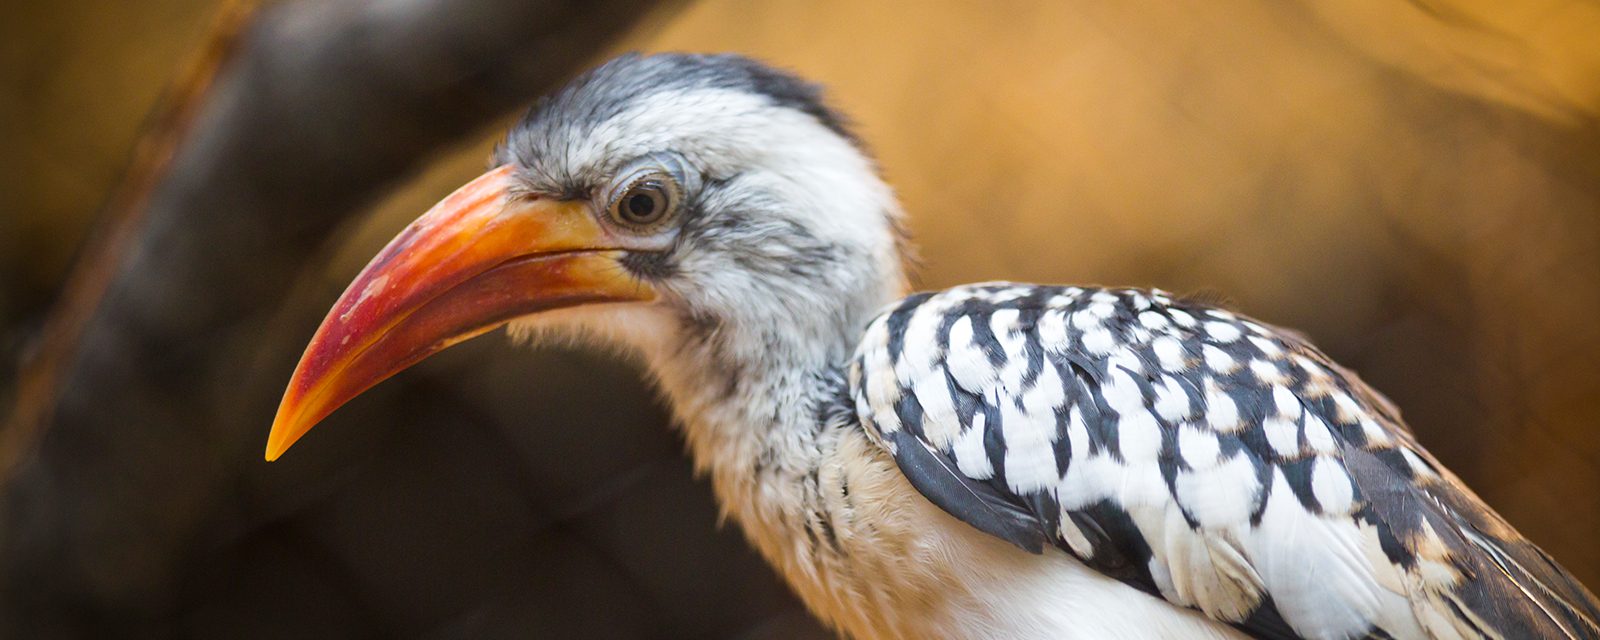 Red-billed hornbill in exhibit